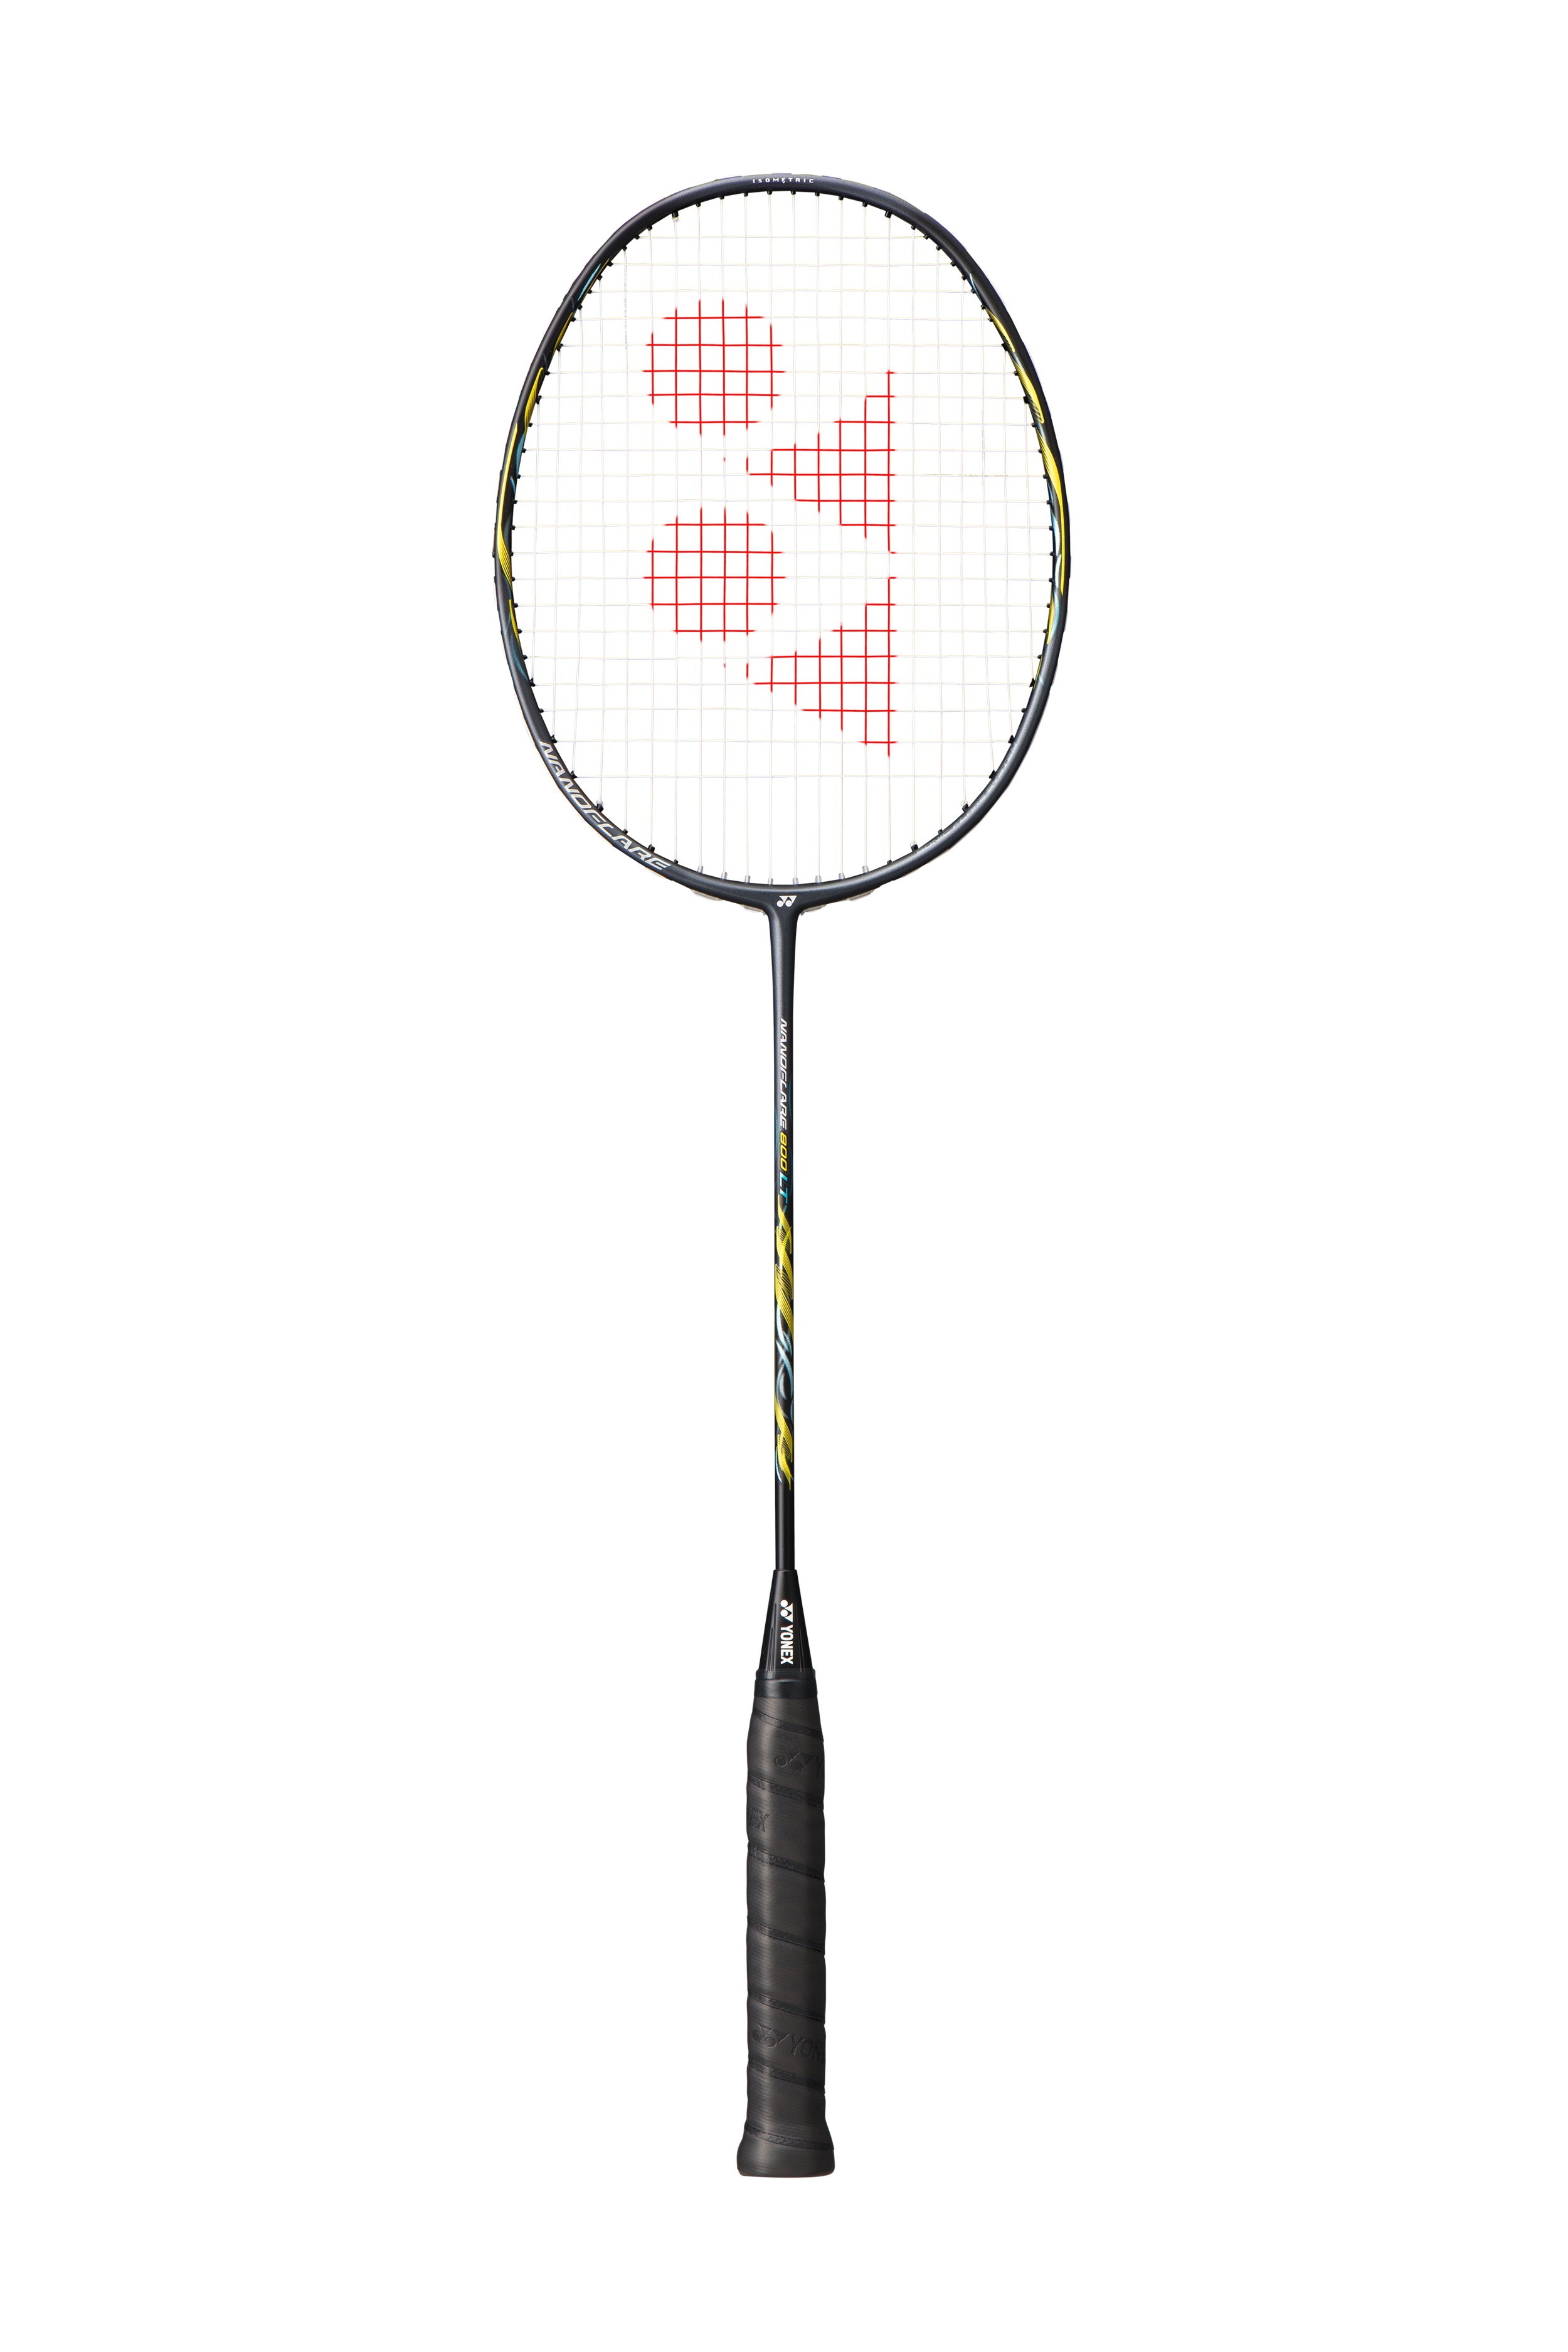 Yonex NanoFlare 800 LT Badminton Racket